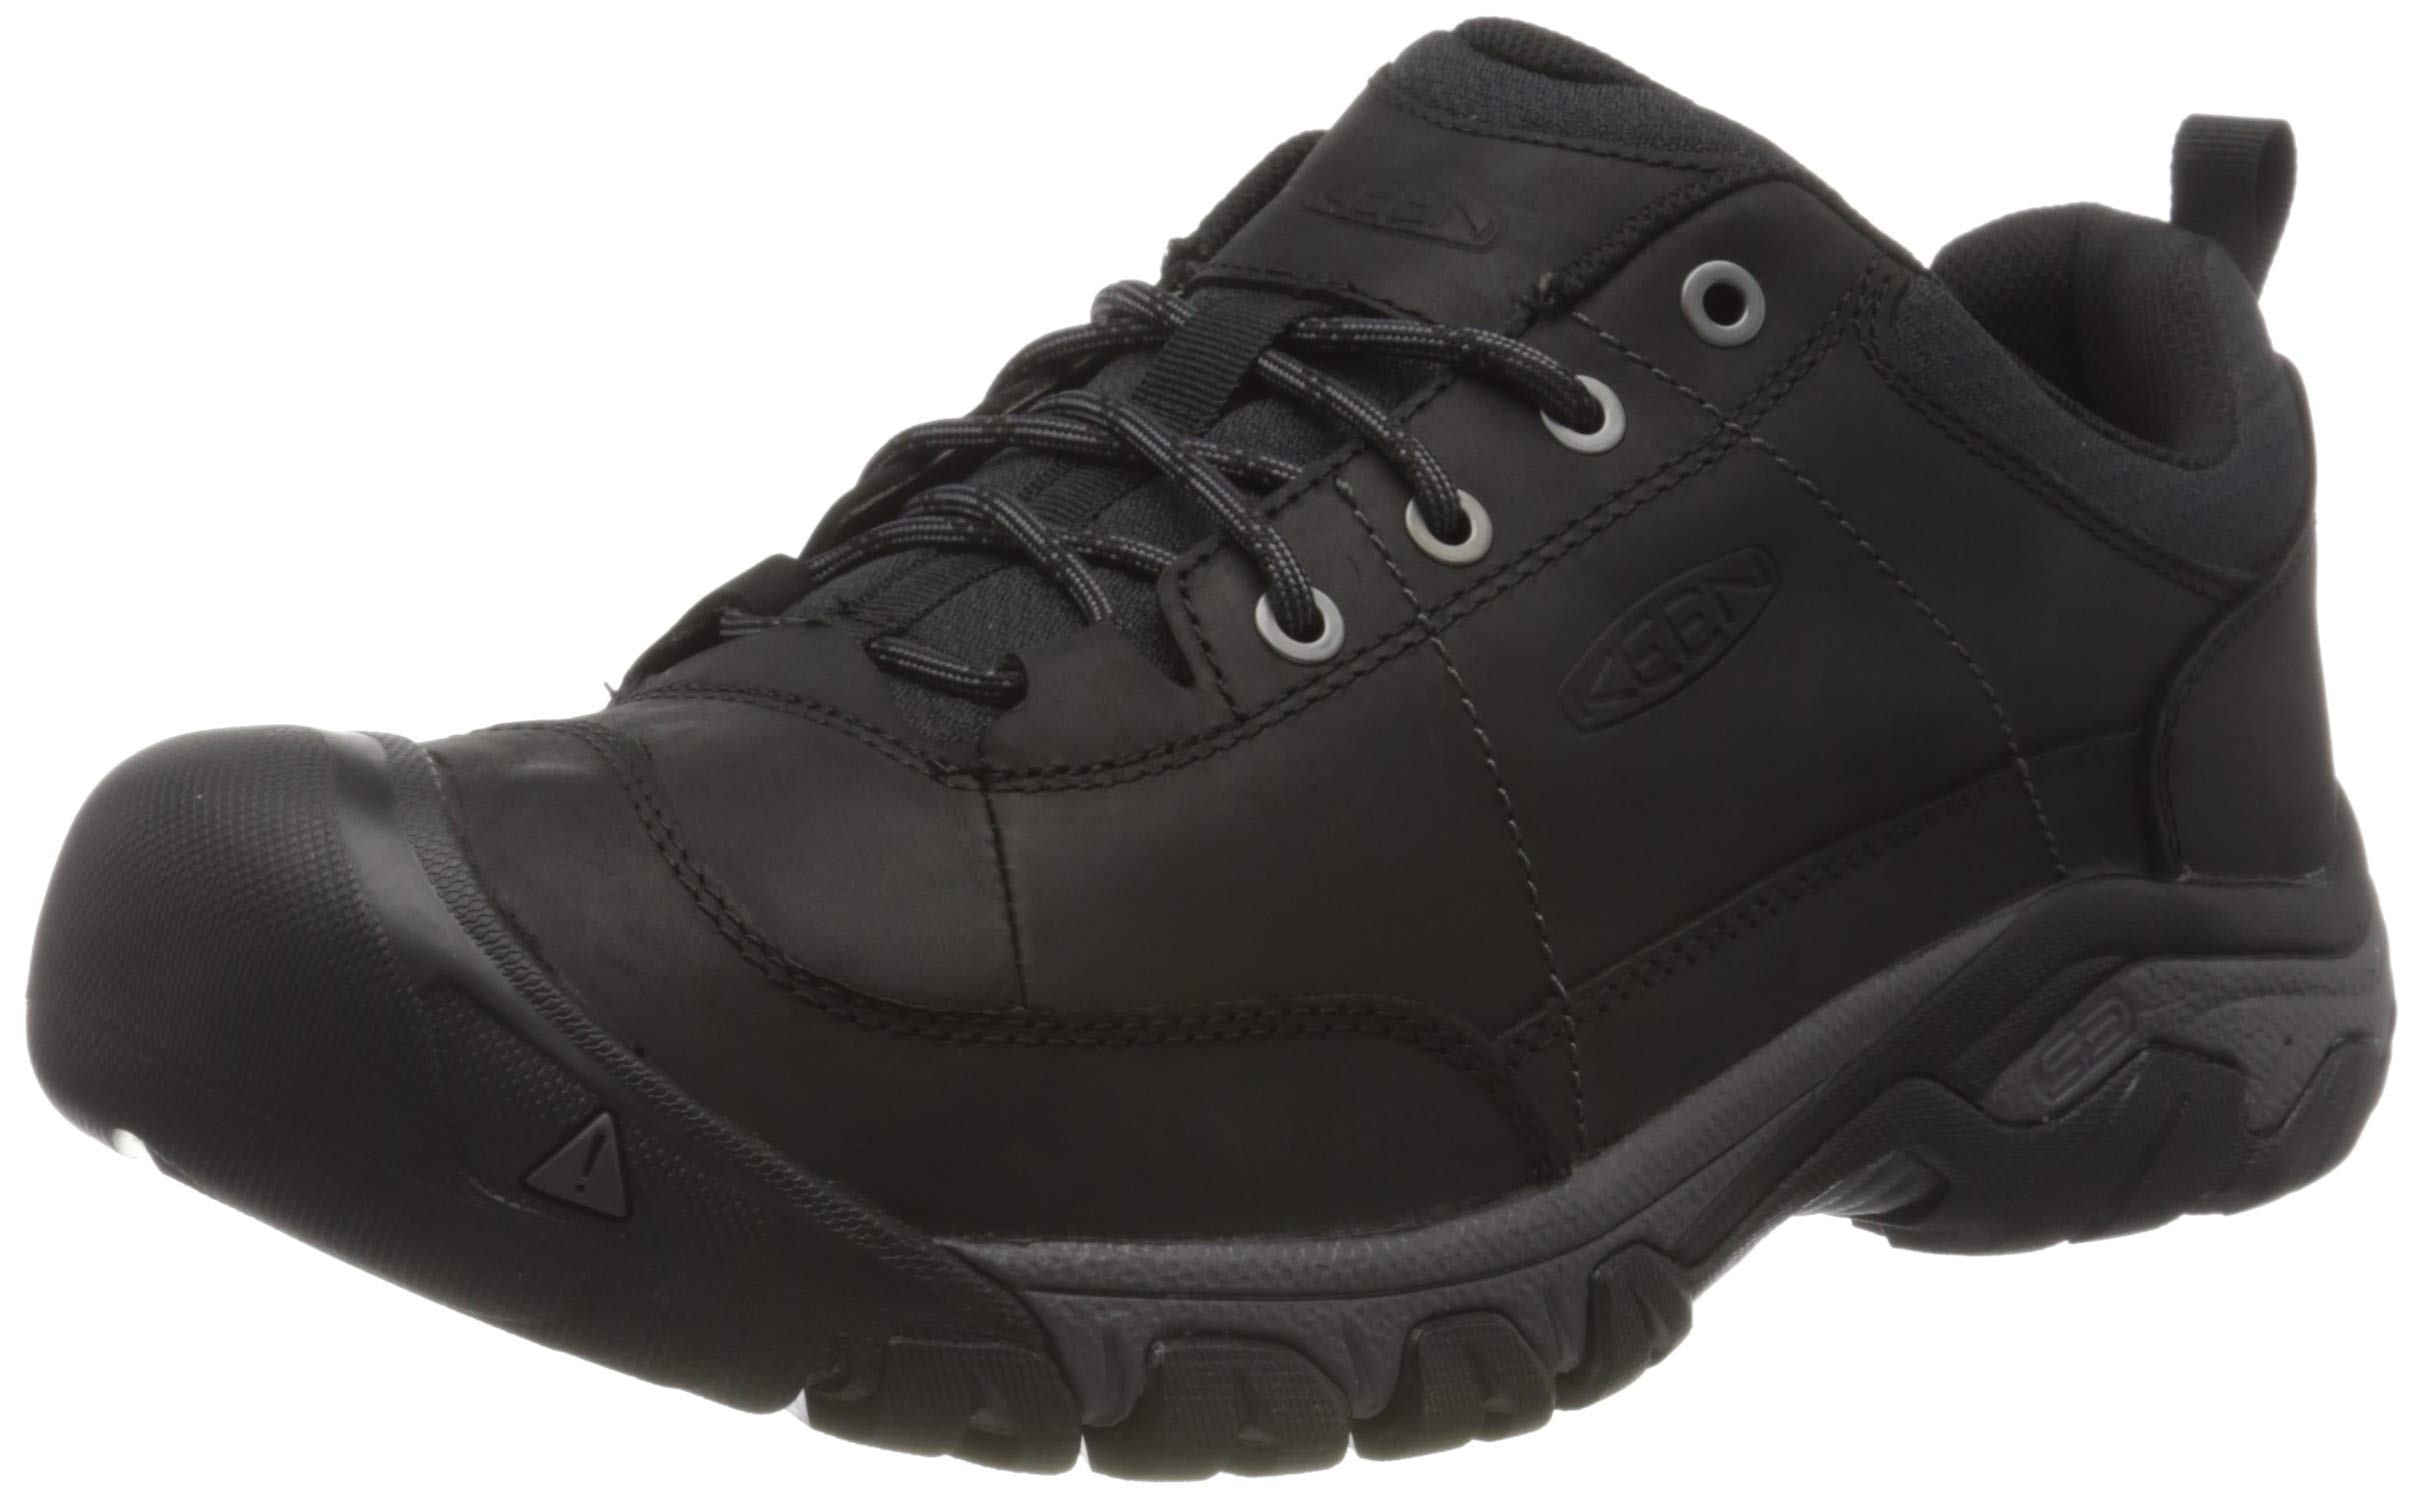 KEEN Men's Targhee 3 Oxford Casual Hiking Shoes